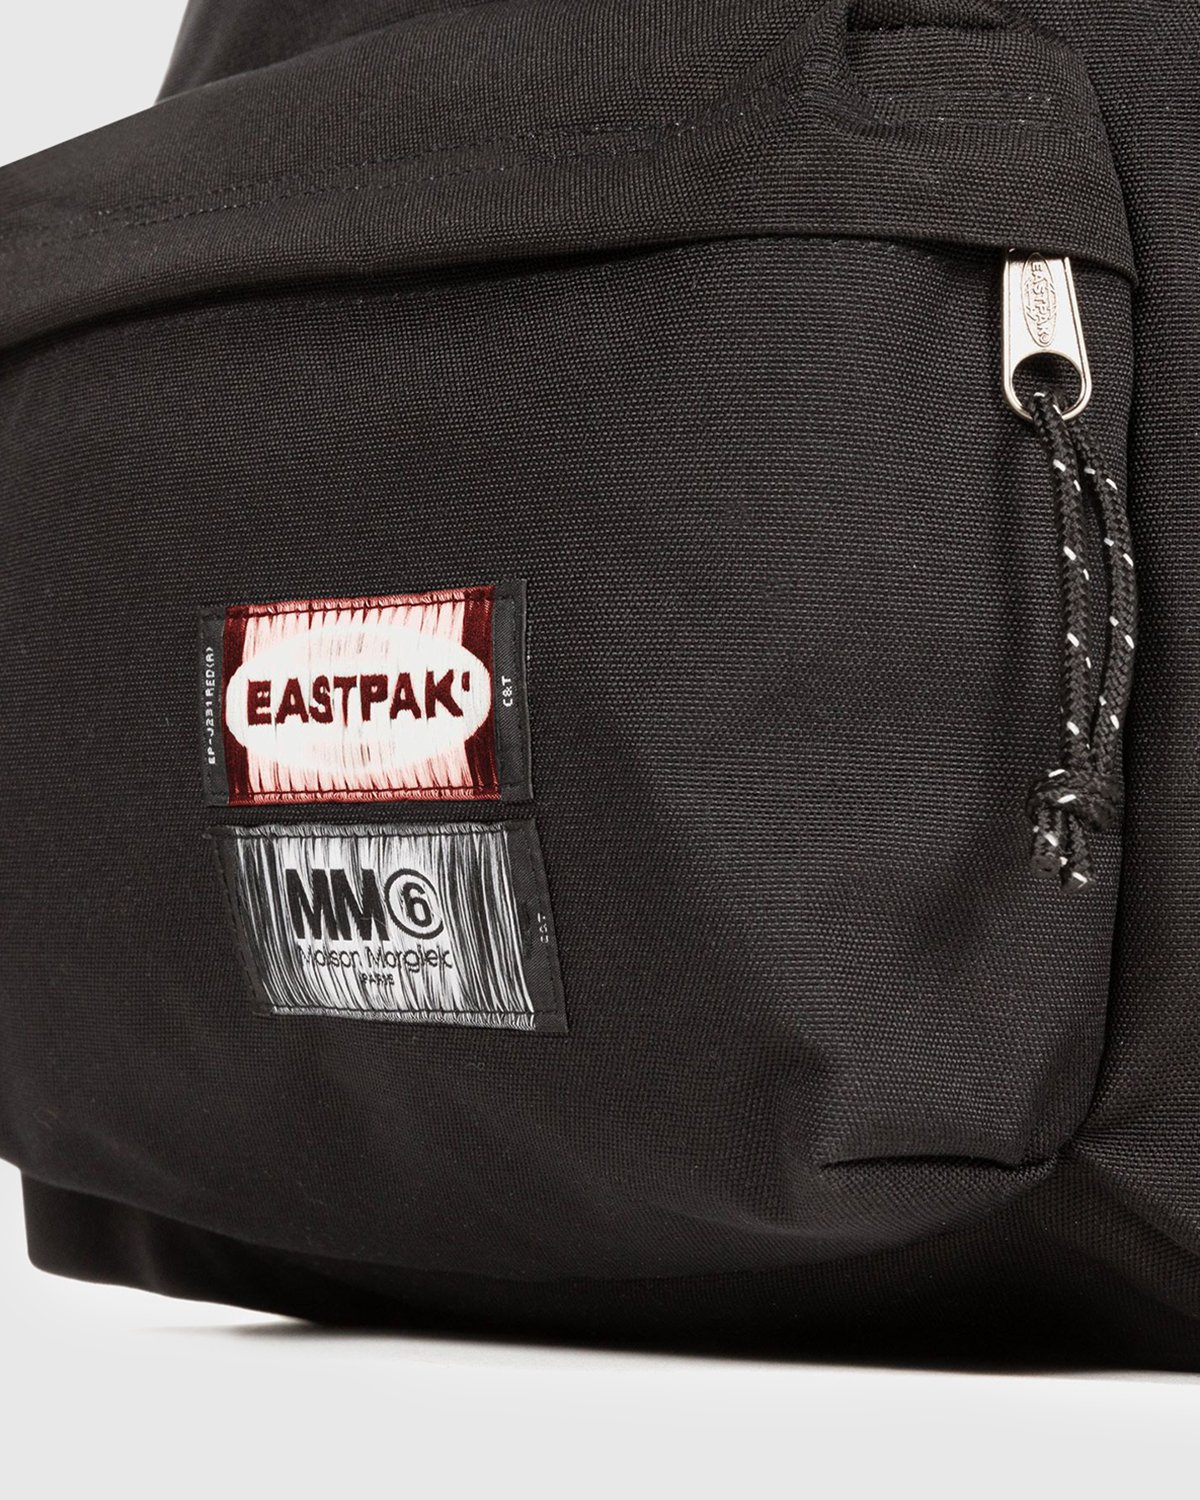 MM6 Maison Margiela x Eastpak - Padded Backpack Black - Accessories - Black - Image 9